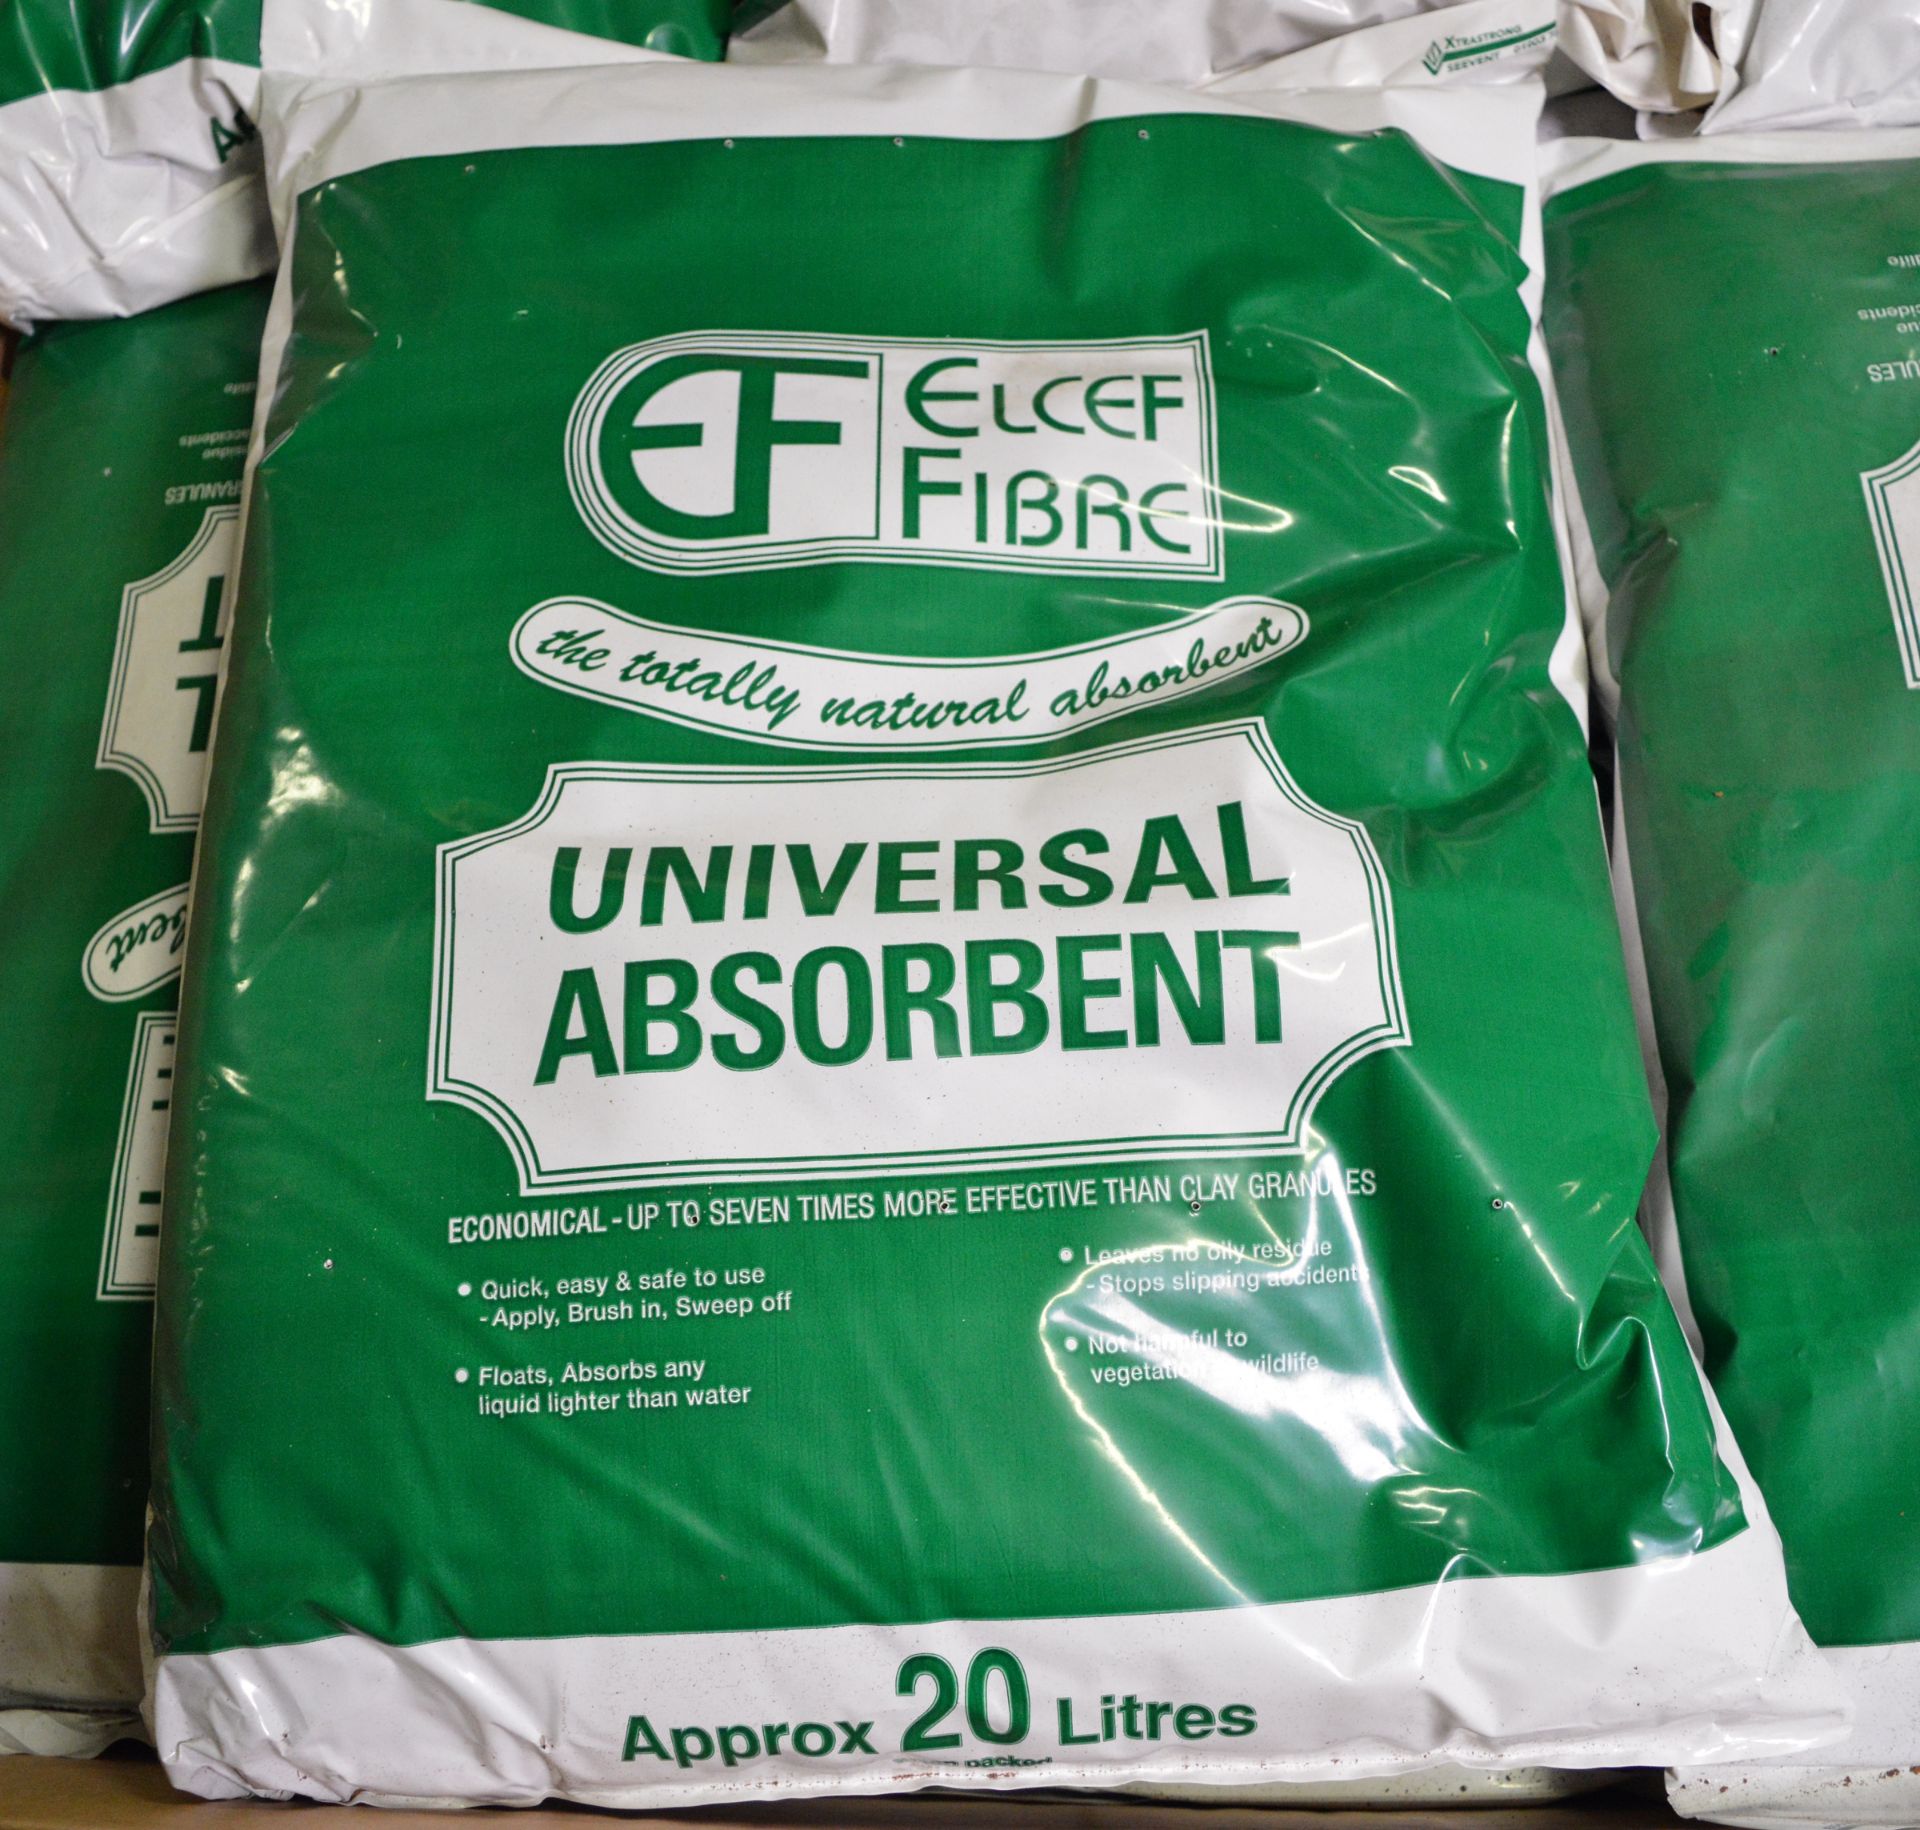 Elcef Fibre universal absorbant - 20 lires per bag - 28 bags - Image 2 of 4